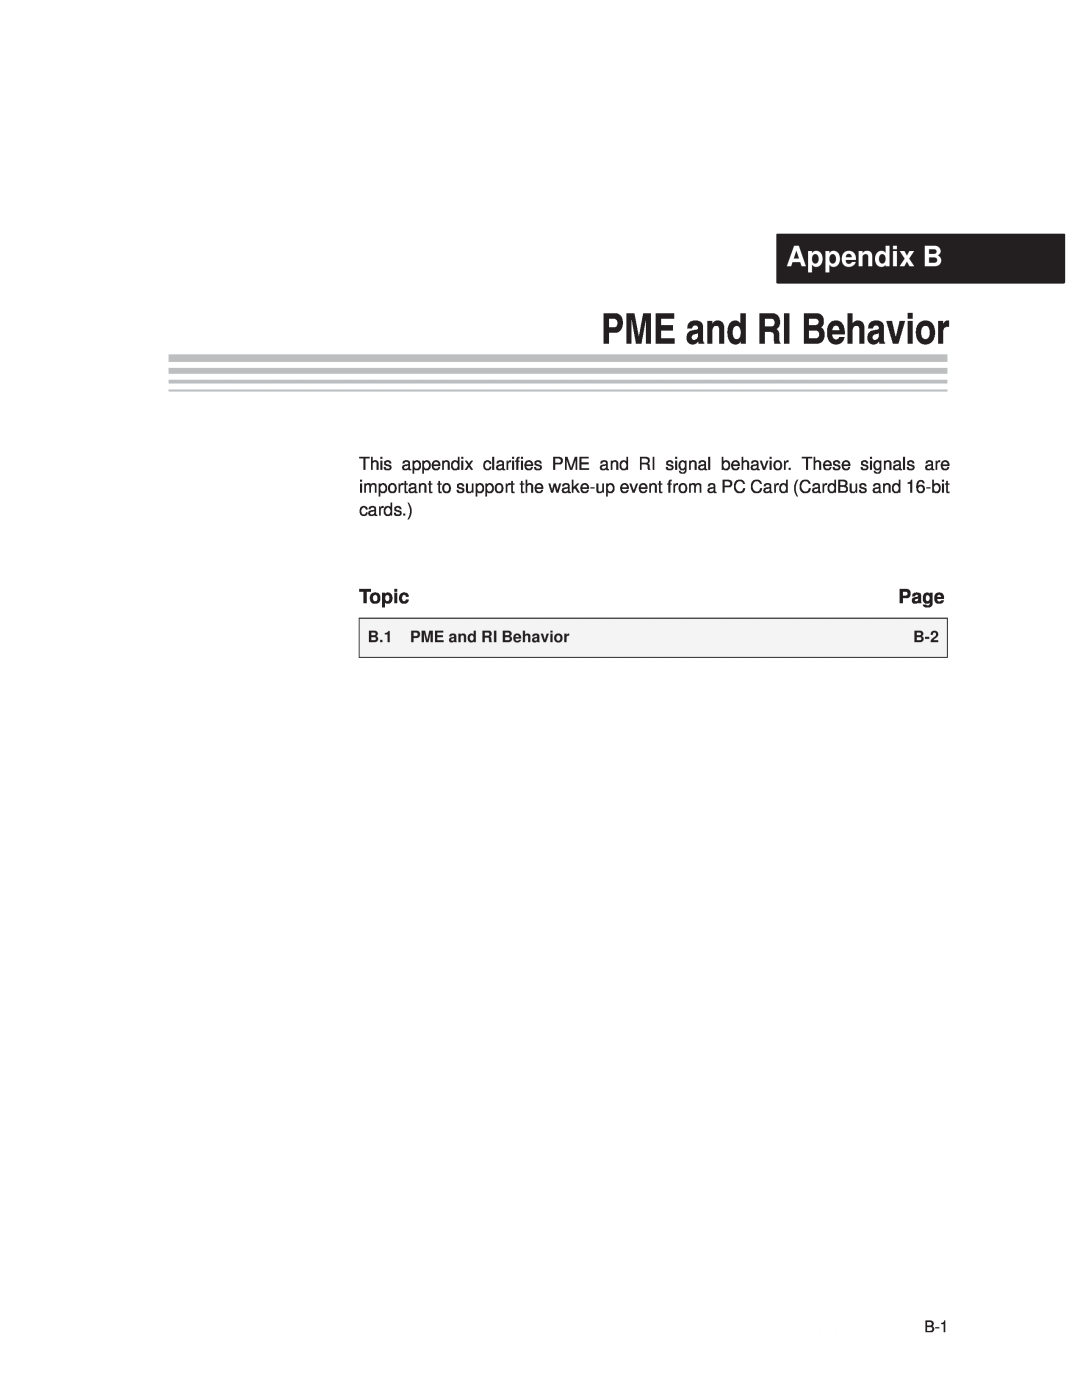 Texas Instruments PCI445X manual PME and RI Behavior, Appendix B, Topic, Page 